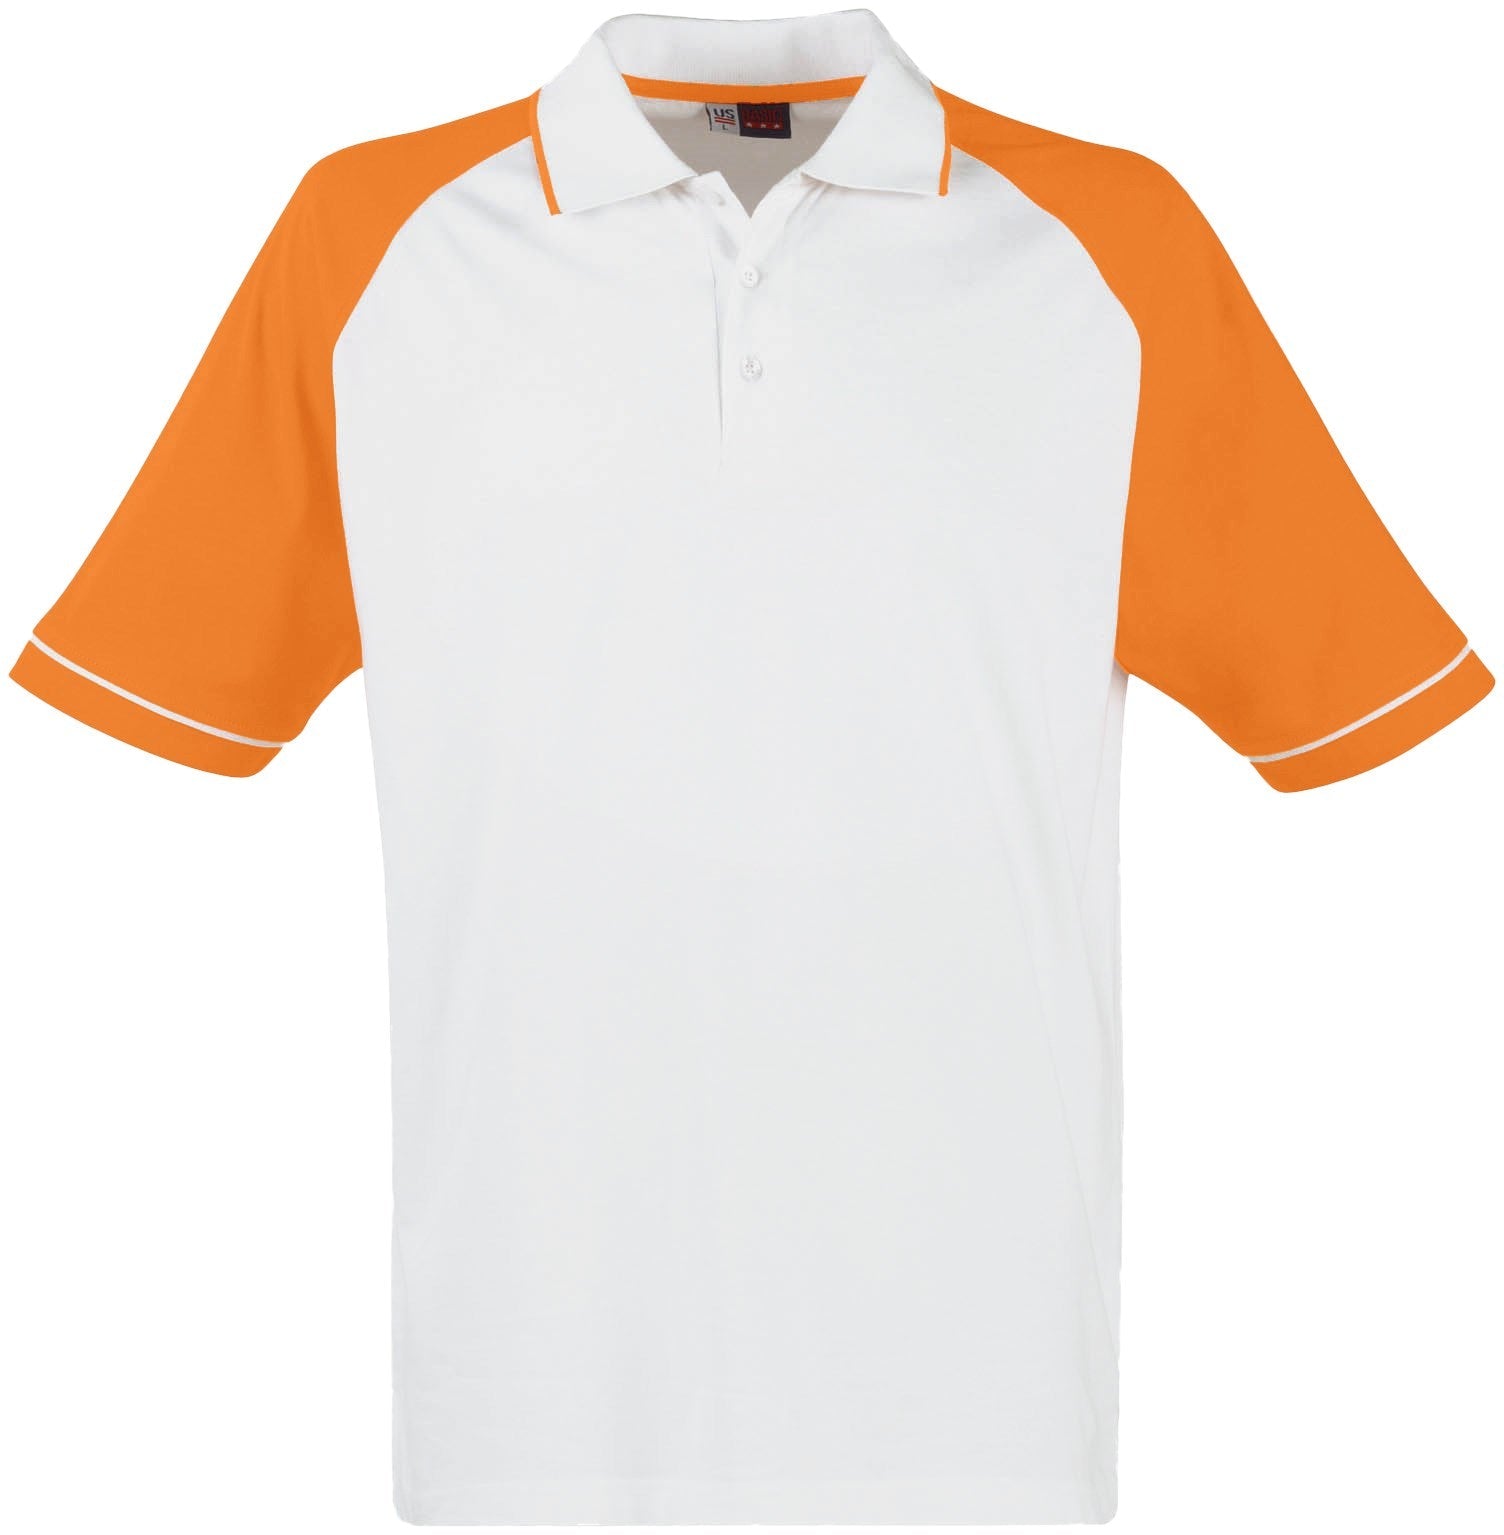 Mens Sydney Golf Shirt - Black Only-2XL-Orange-O